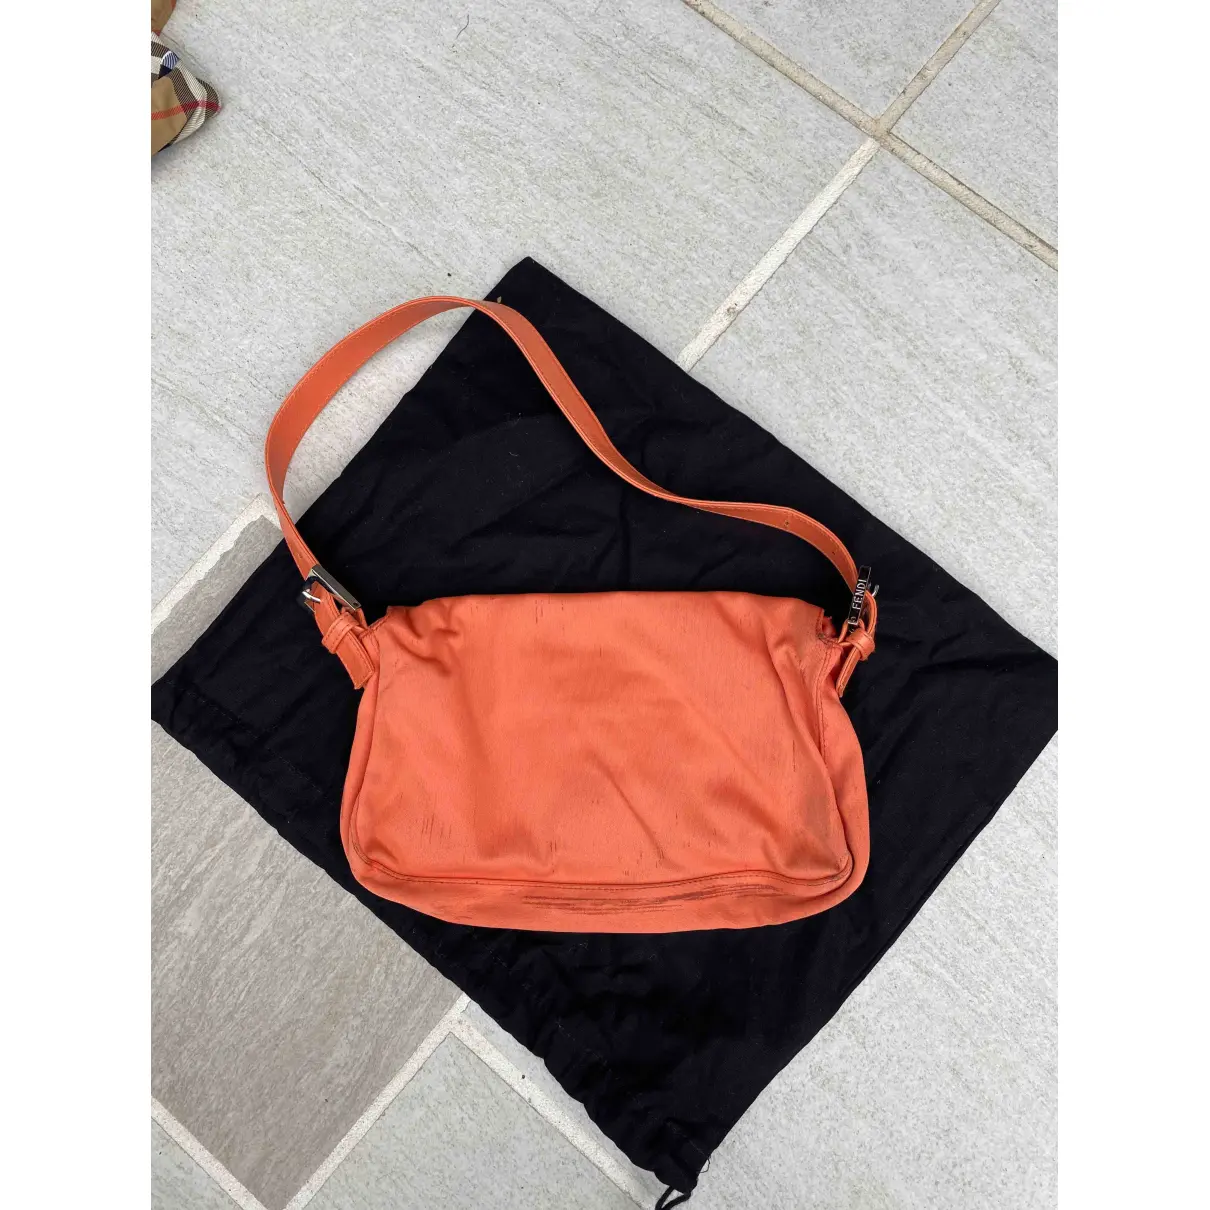 Buy Fendi Baguette handbag online